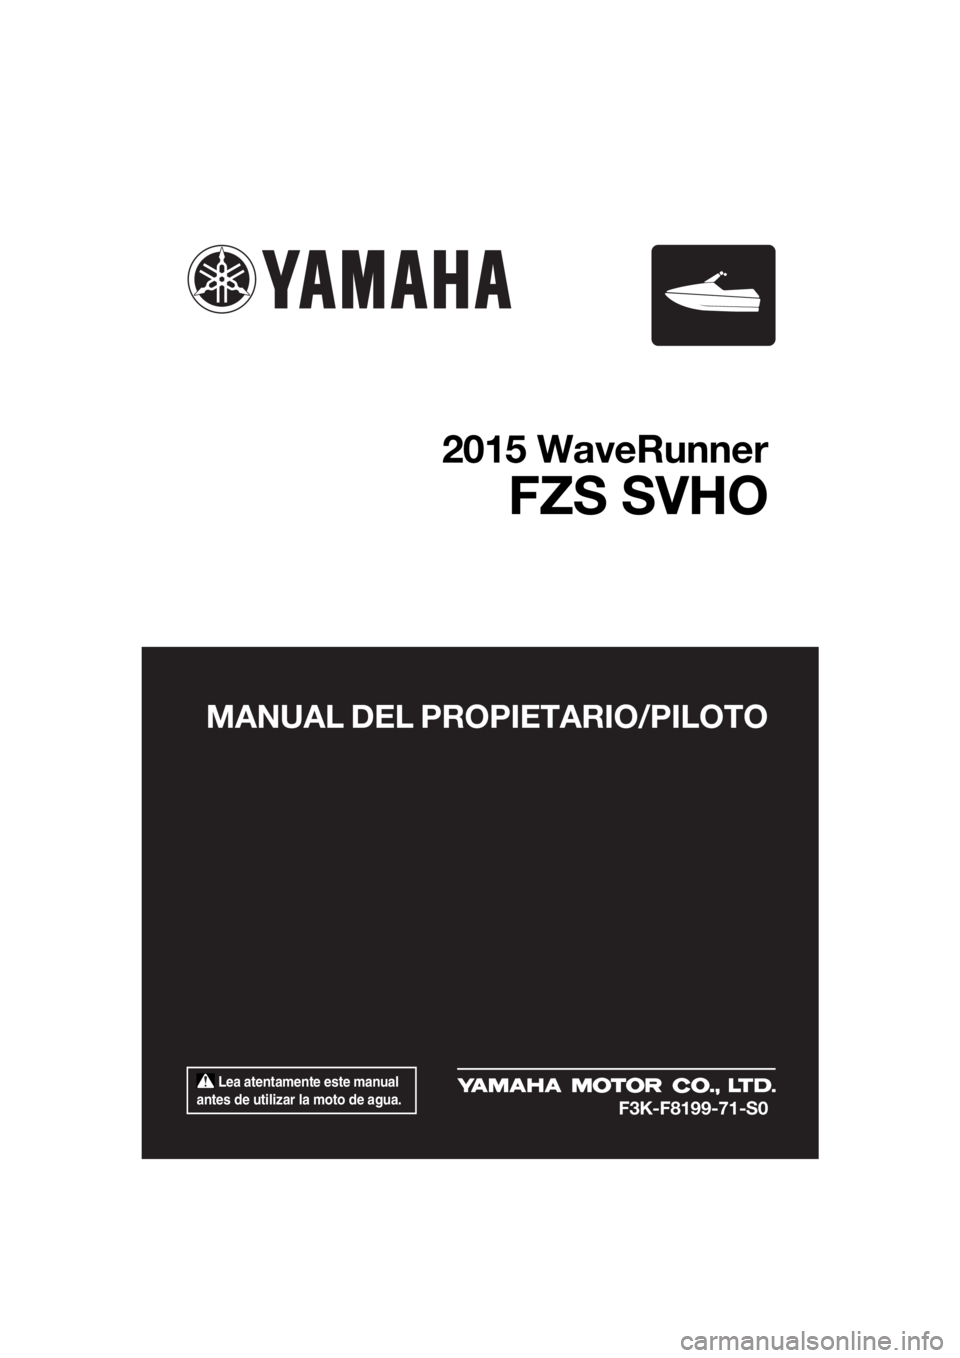 YAMAHA FZS 2015  Manuale de Empleo (in Spanish)  Lea atentamente este manual 
antes de utilizar la moto de agua.
MANUAL DEL PROPIETARIO/PILOTO
2015 WaveRunner
FZS SVHO
F3K-F8199-71-S0
UF3K71S0.book  Page 1  Tuesday, August 5, 2014  4:58 PM 